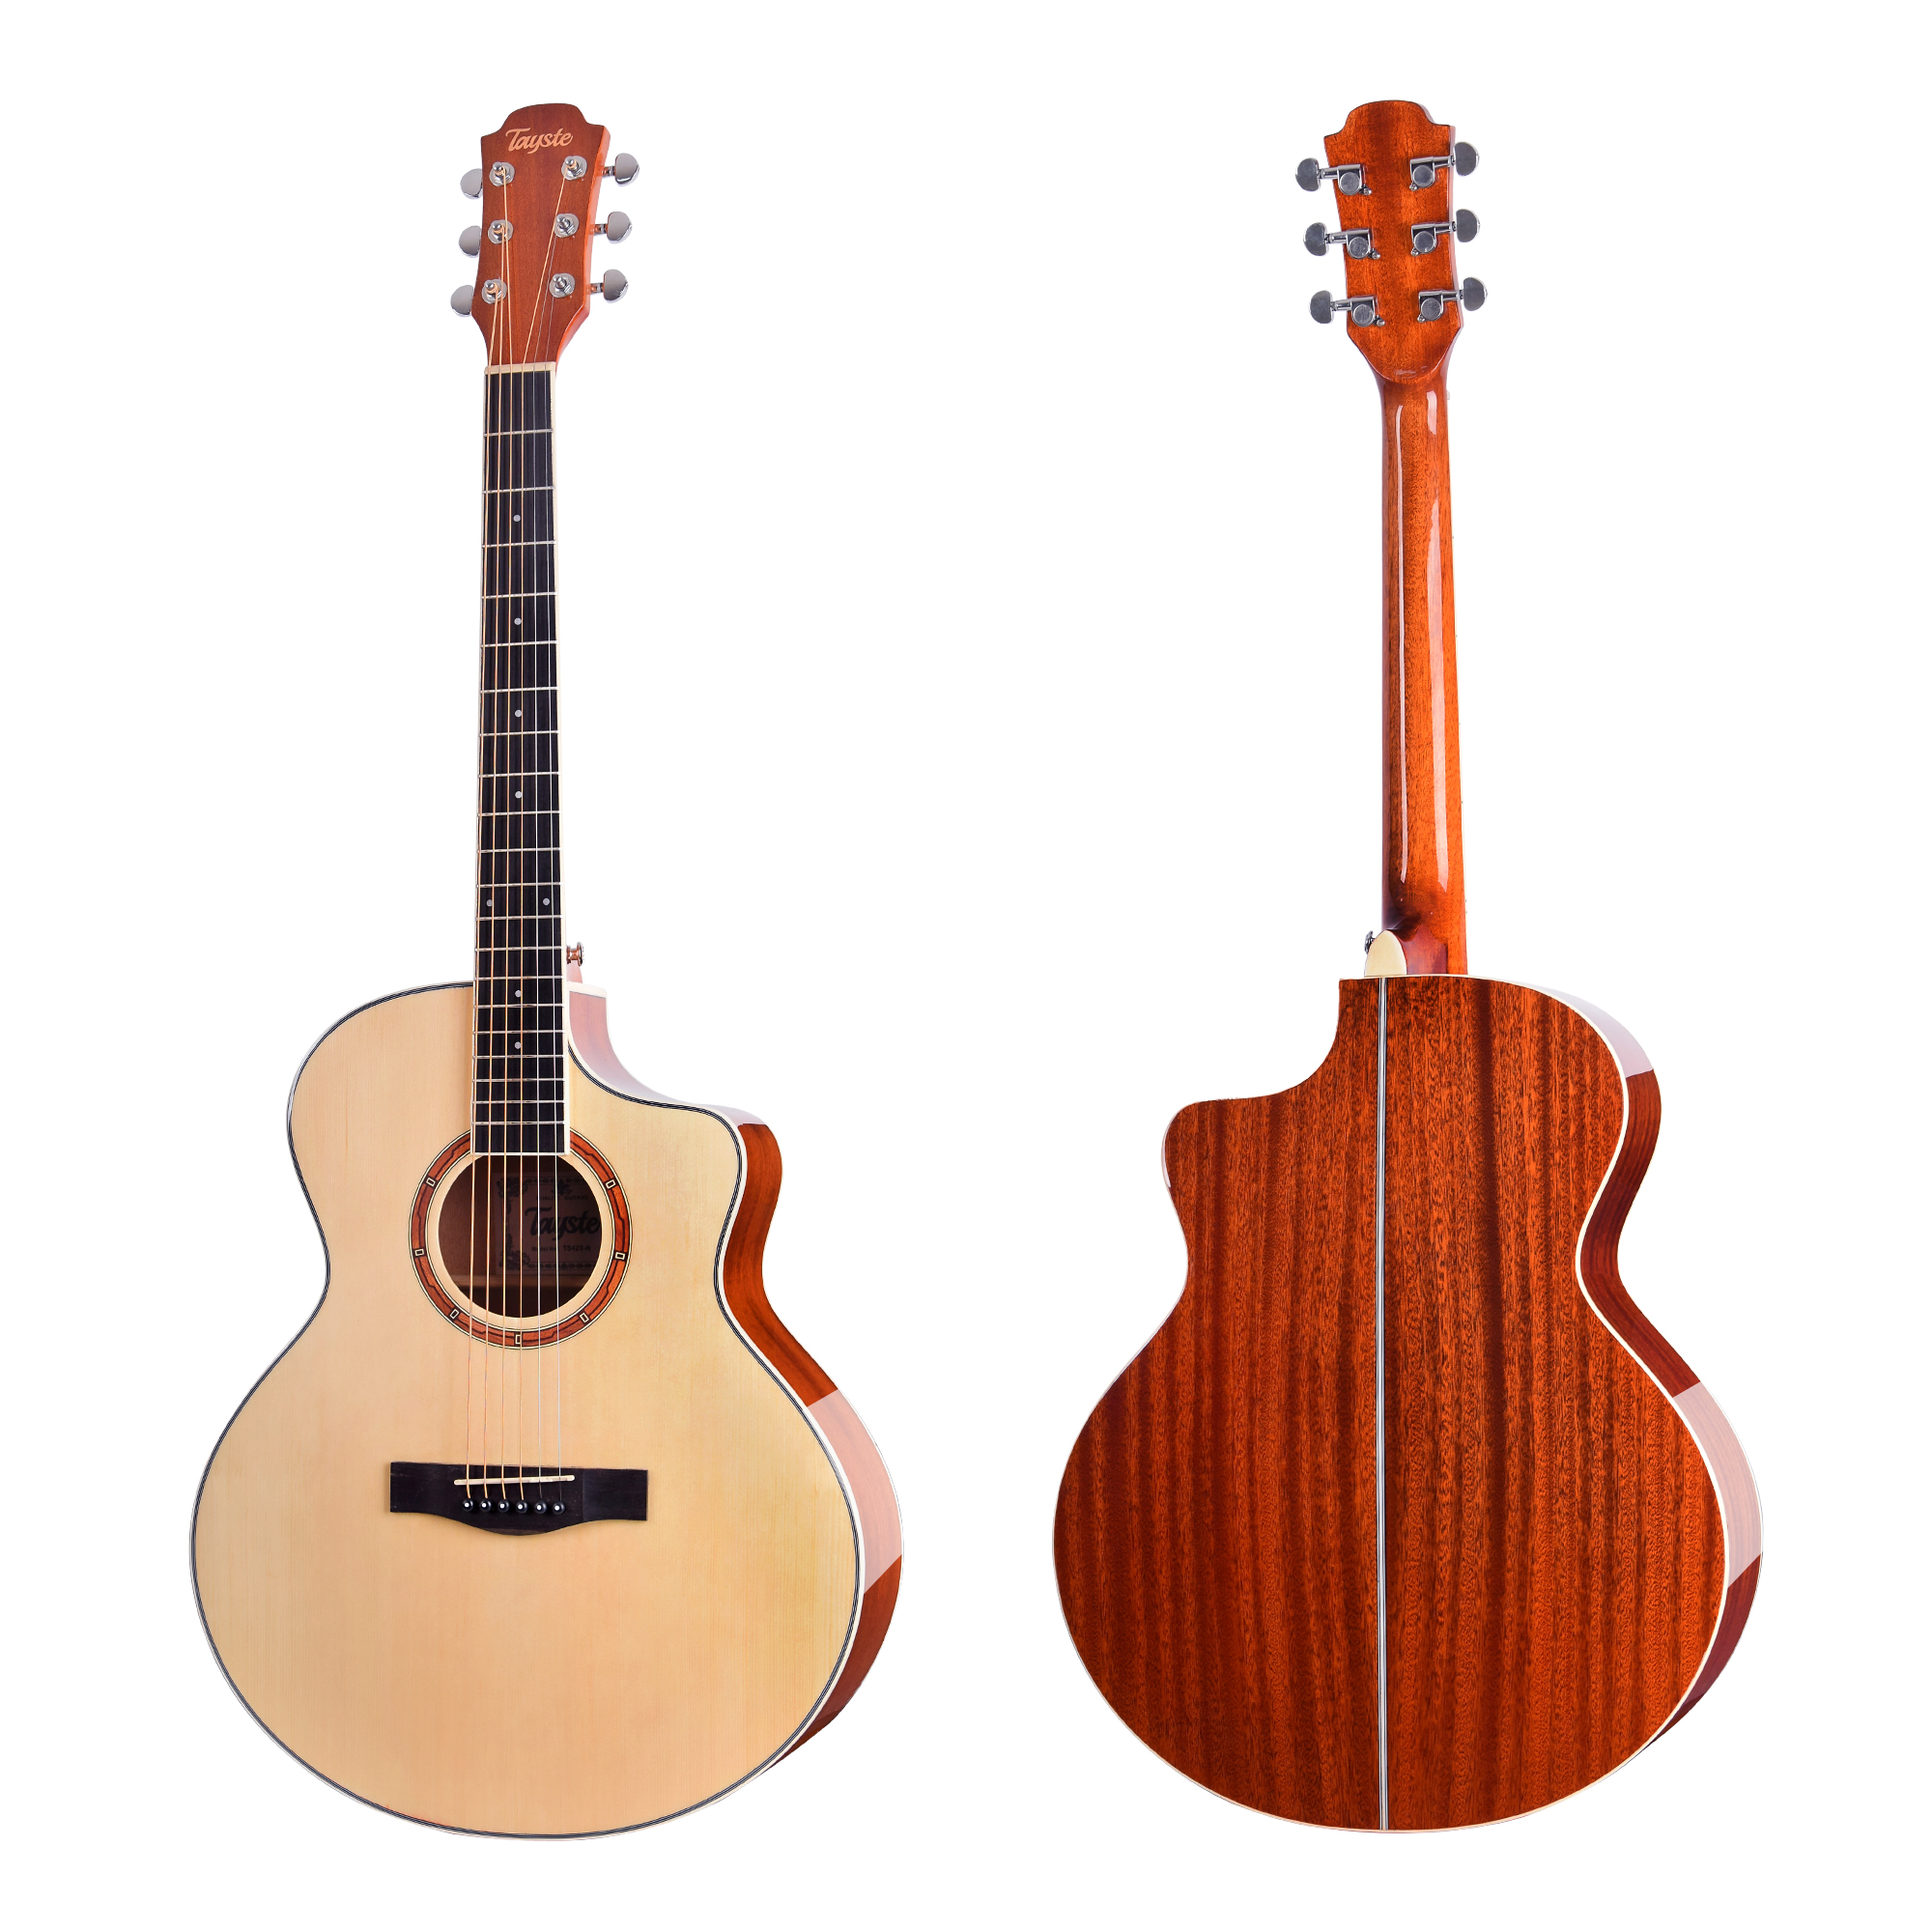 Guitarra de madeira compensada barata ts420-n